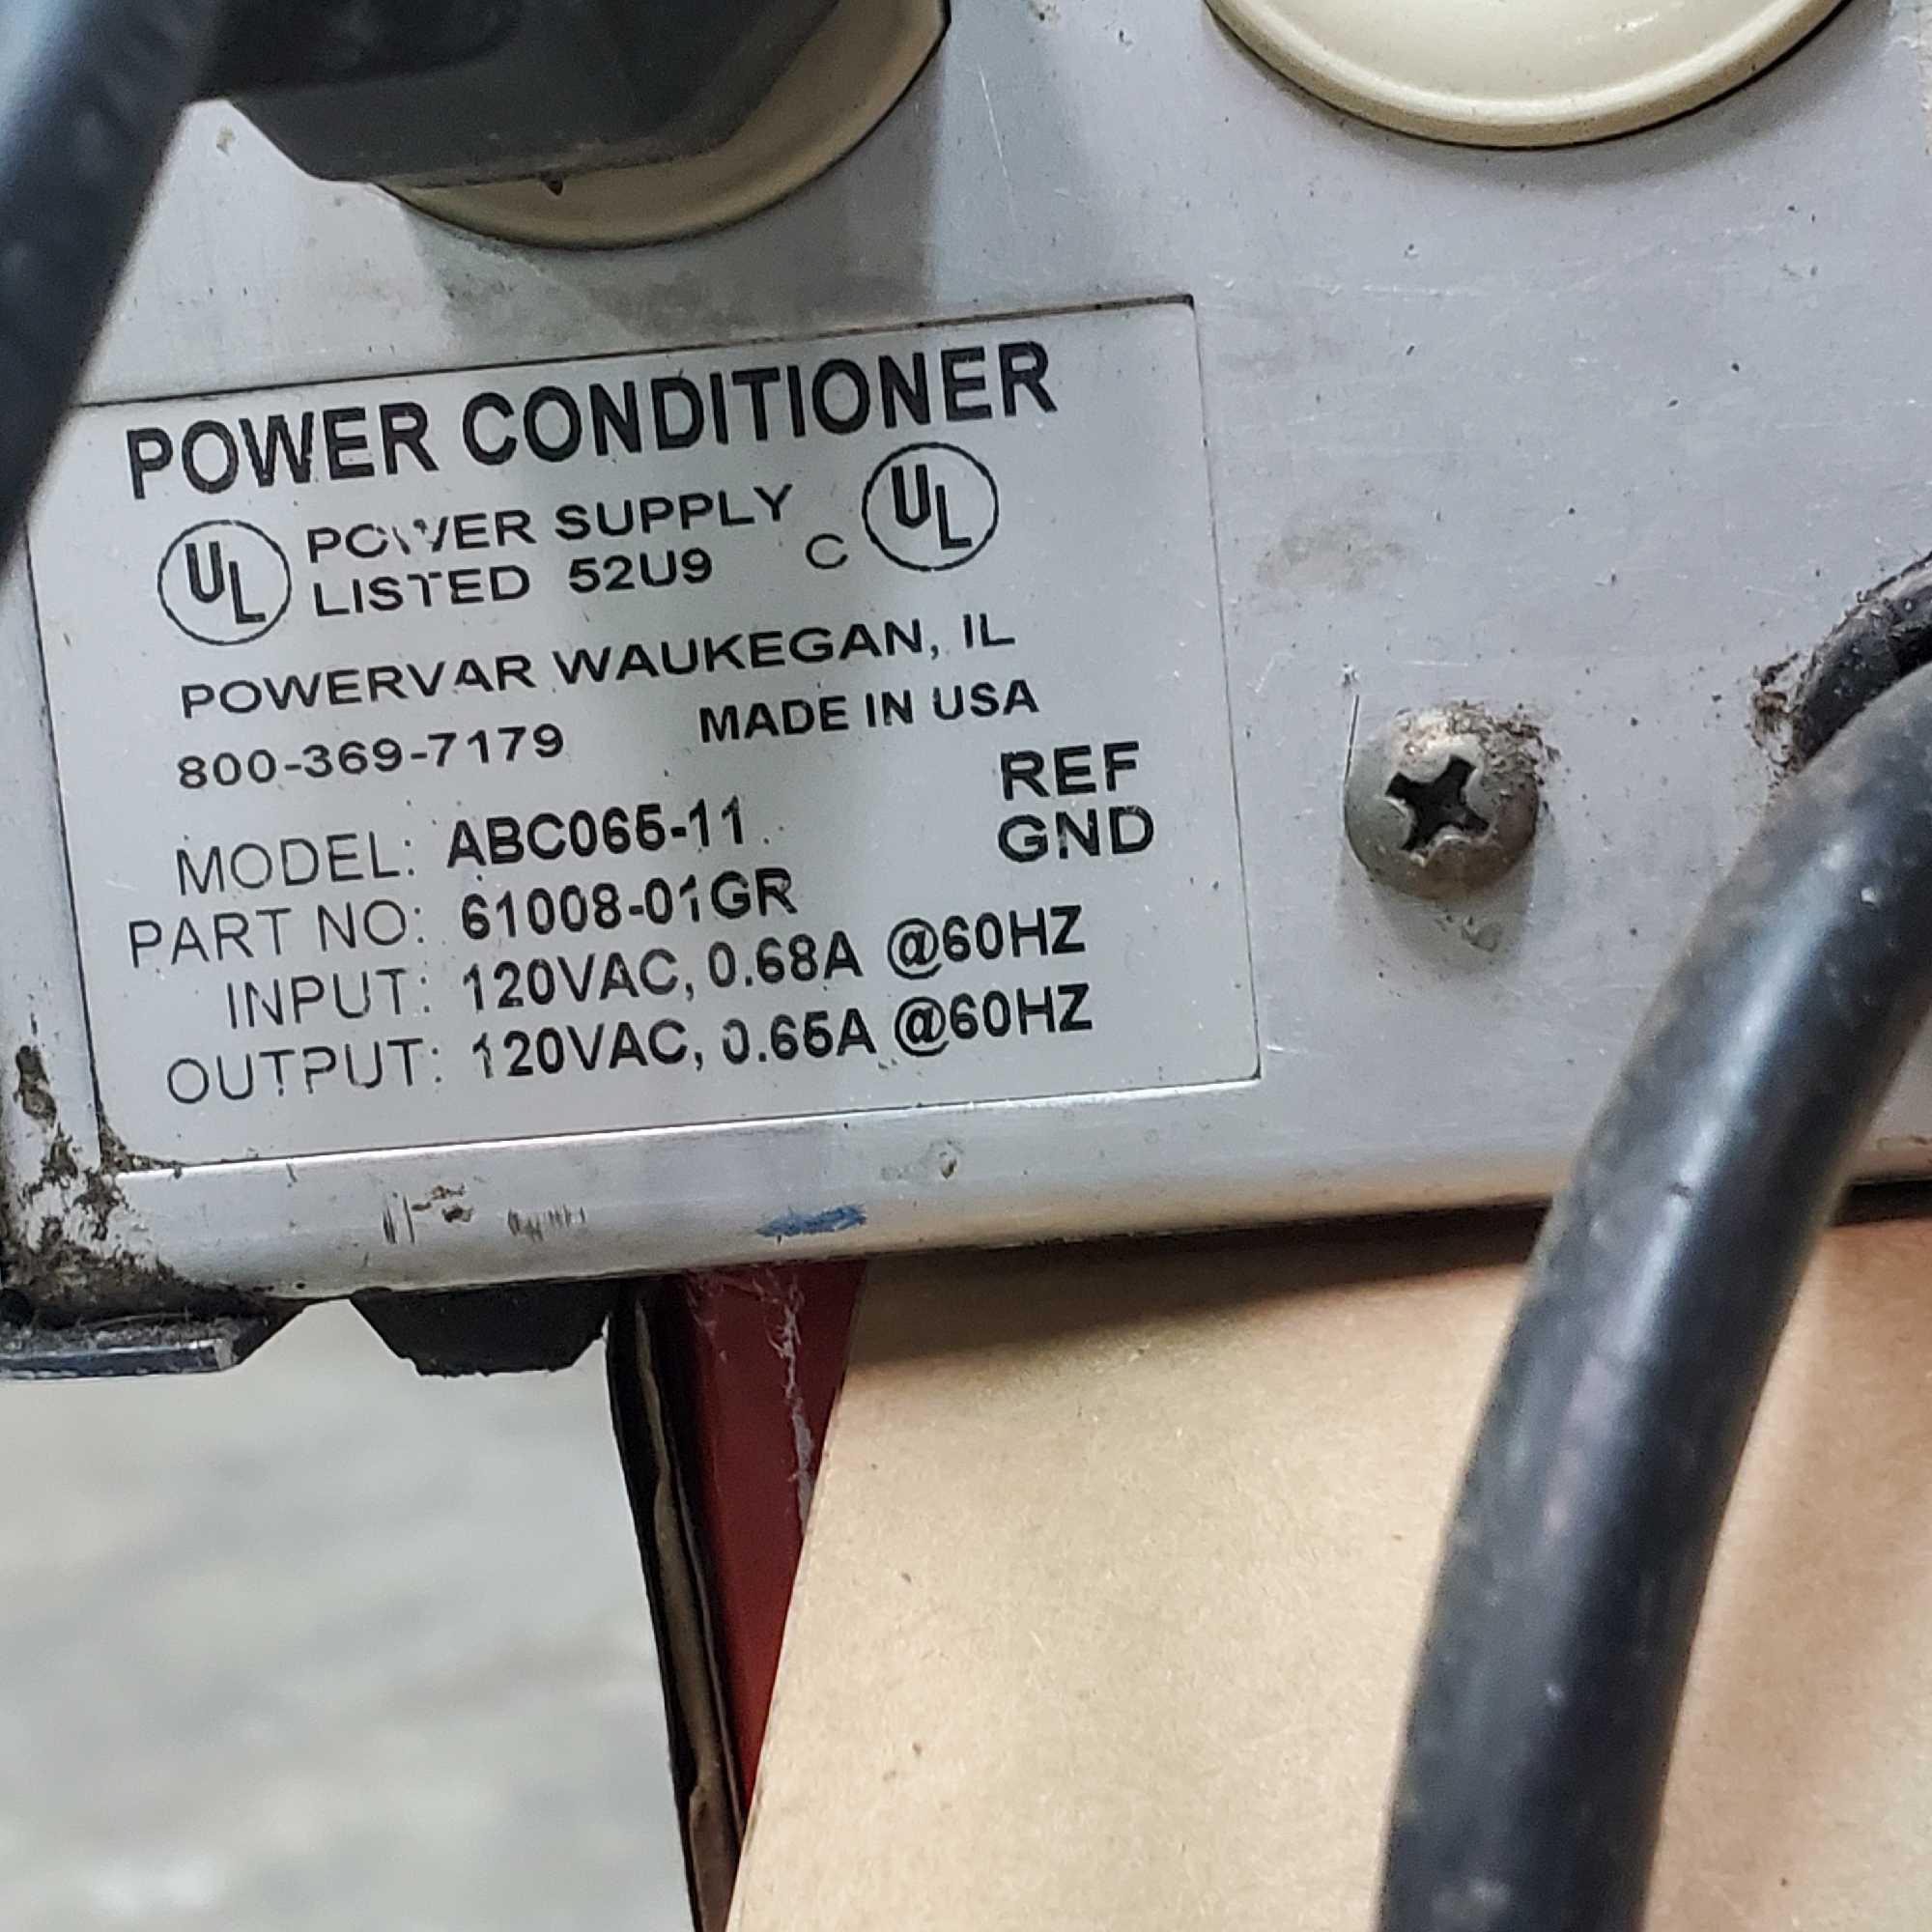 Box lot Powervar power conditioner central Pneumatic air filter/regulator Danair tool lots more